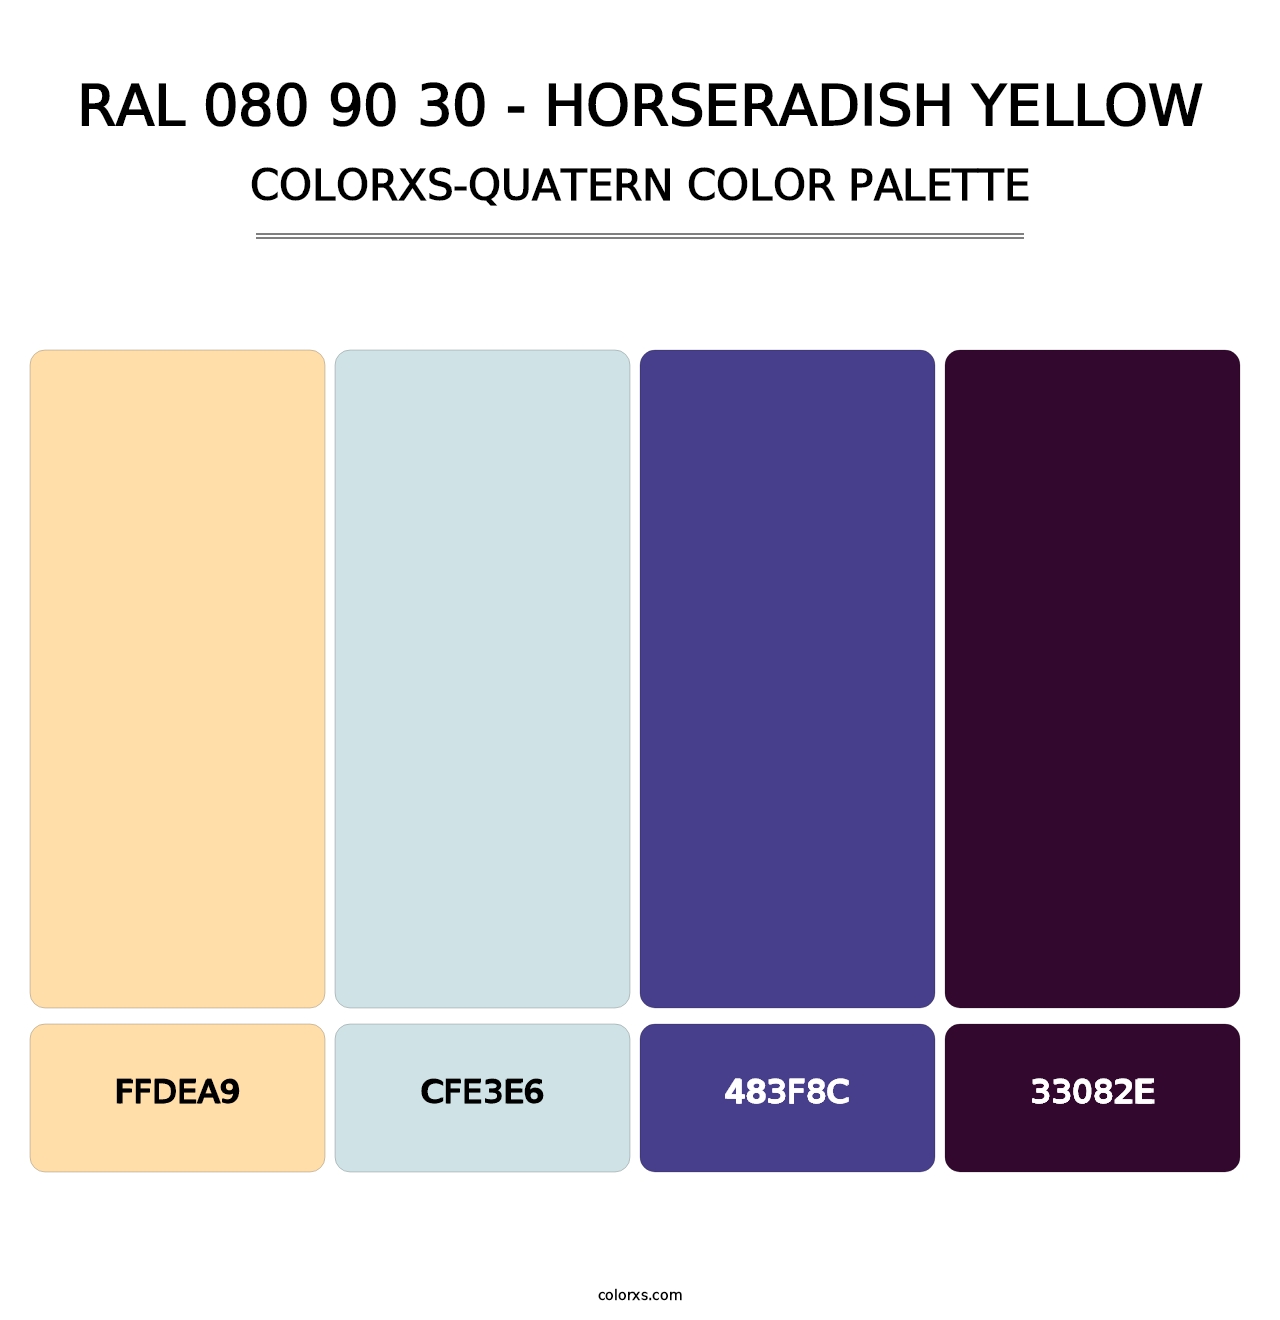 RAL 080 90 30 - Horseradish Yellow - Colorxs Quatern Palette